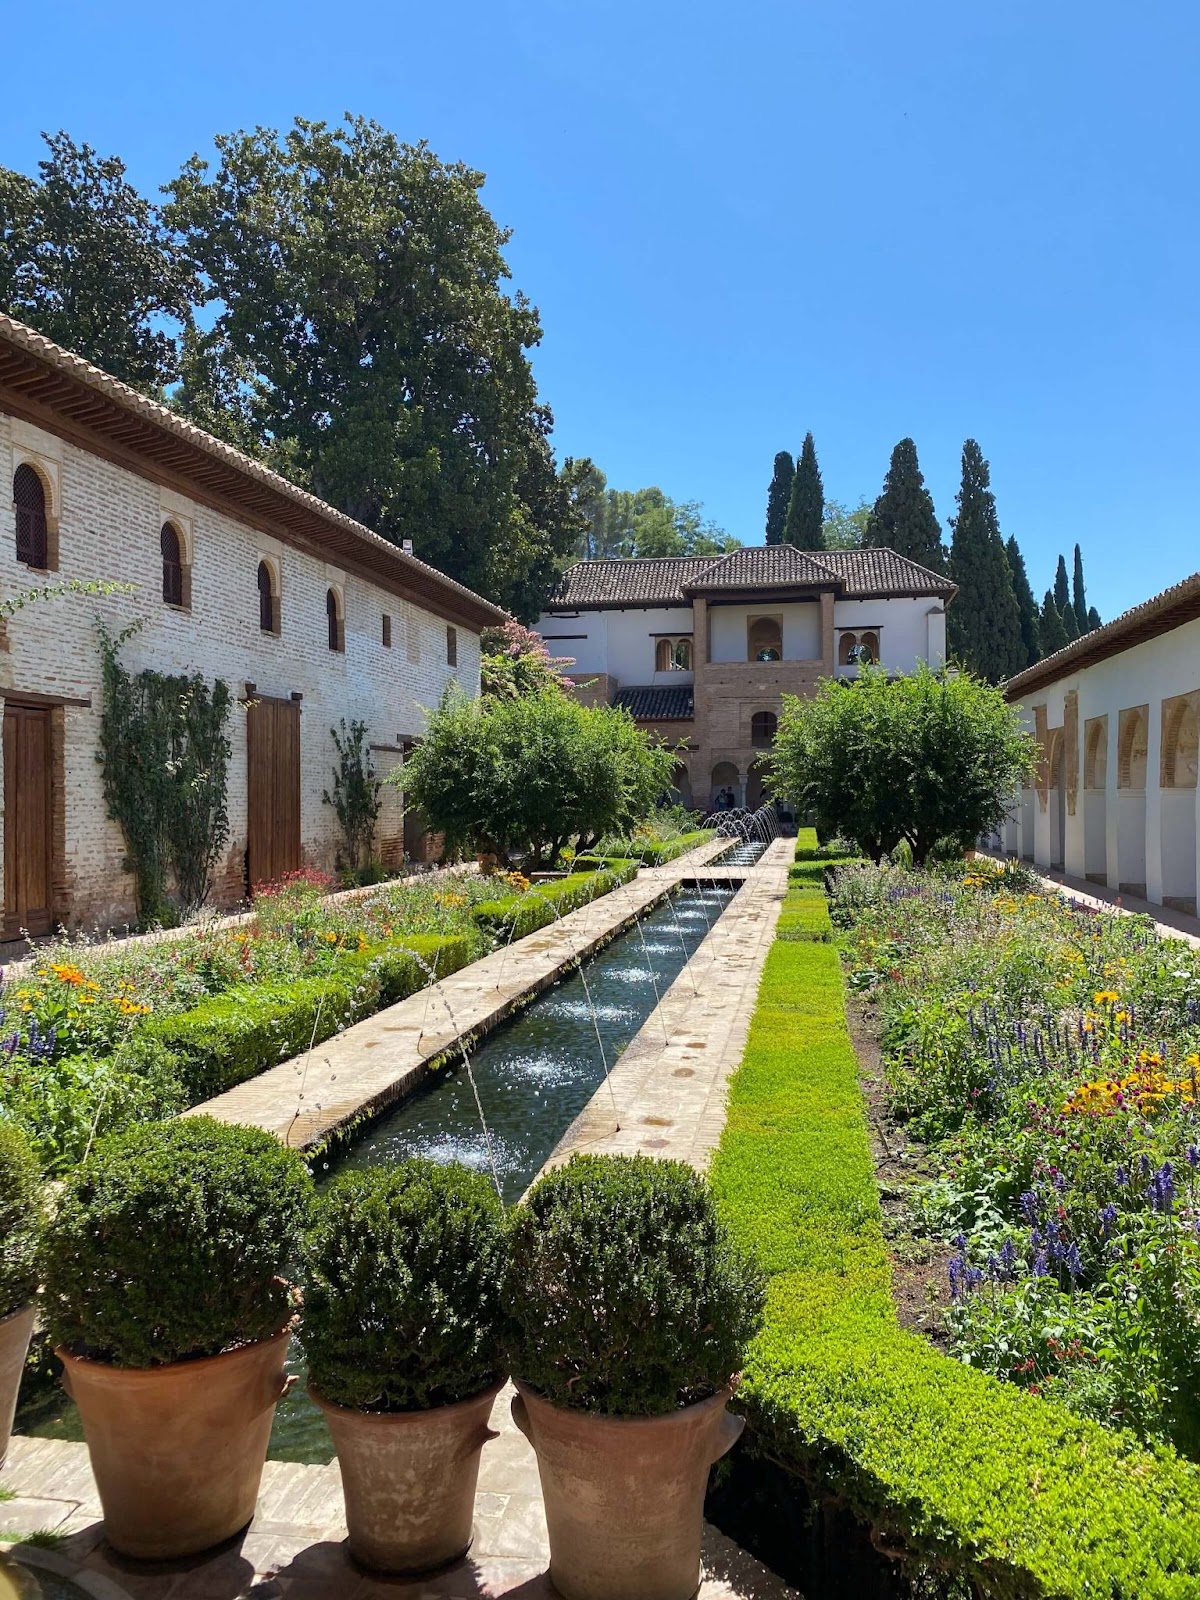 2 days in Granada, Generalife, gardens of the Alhambra, Granada, Spain